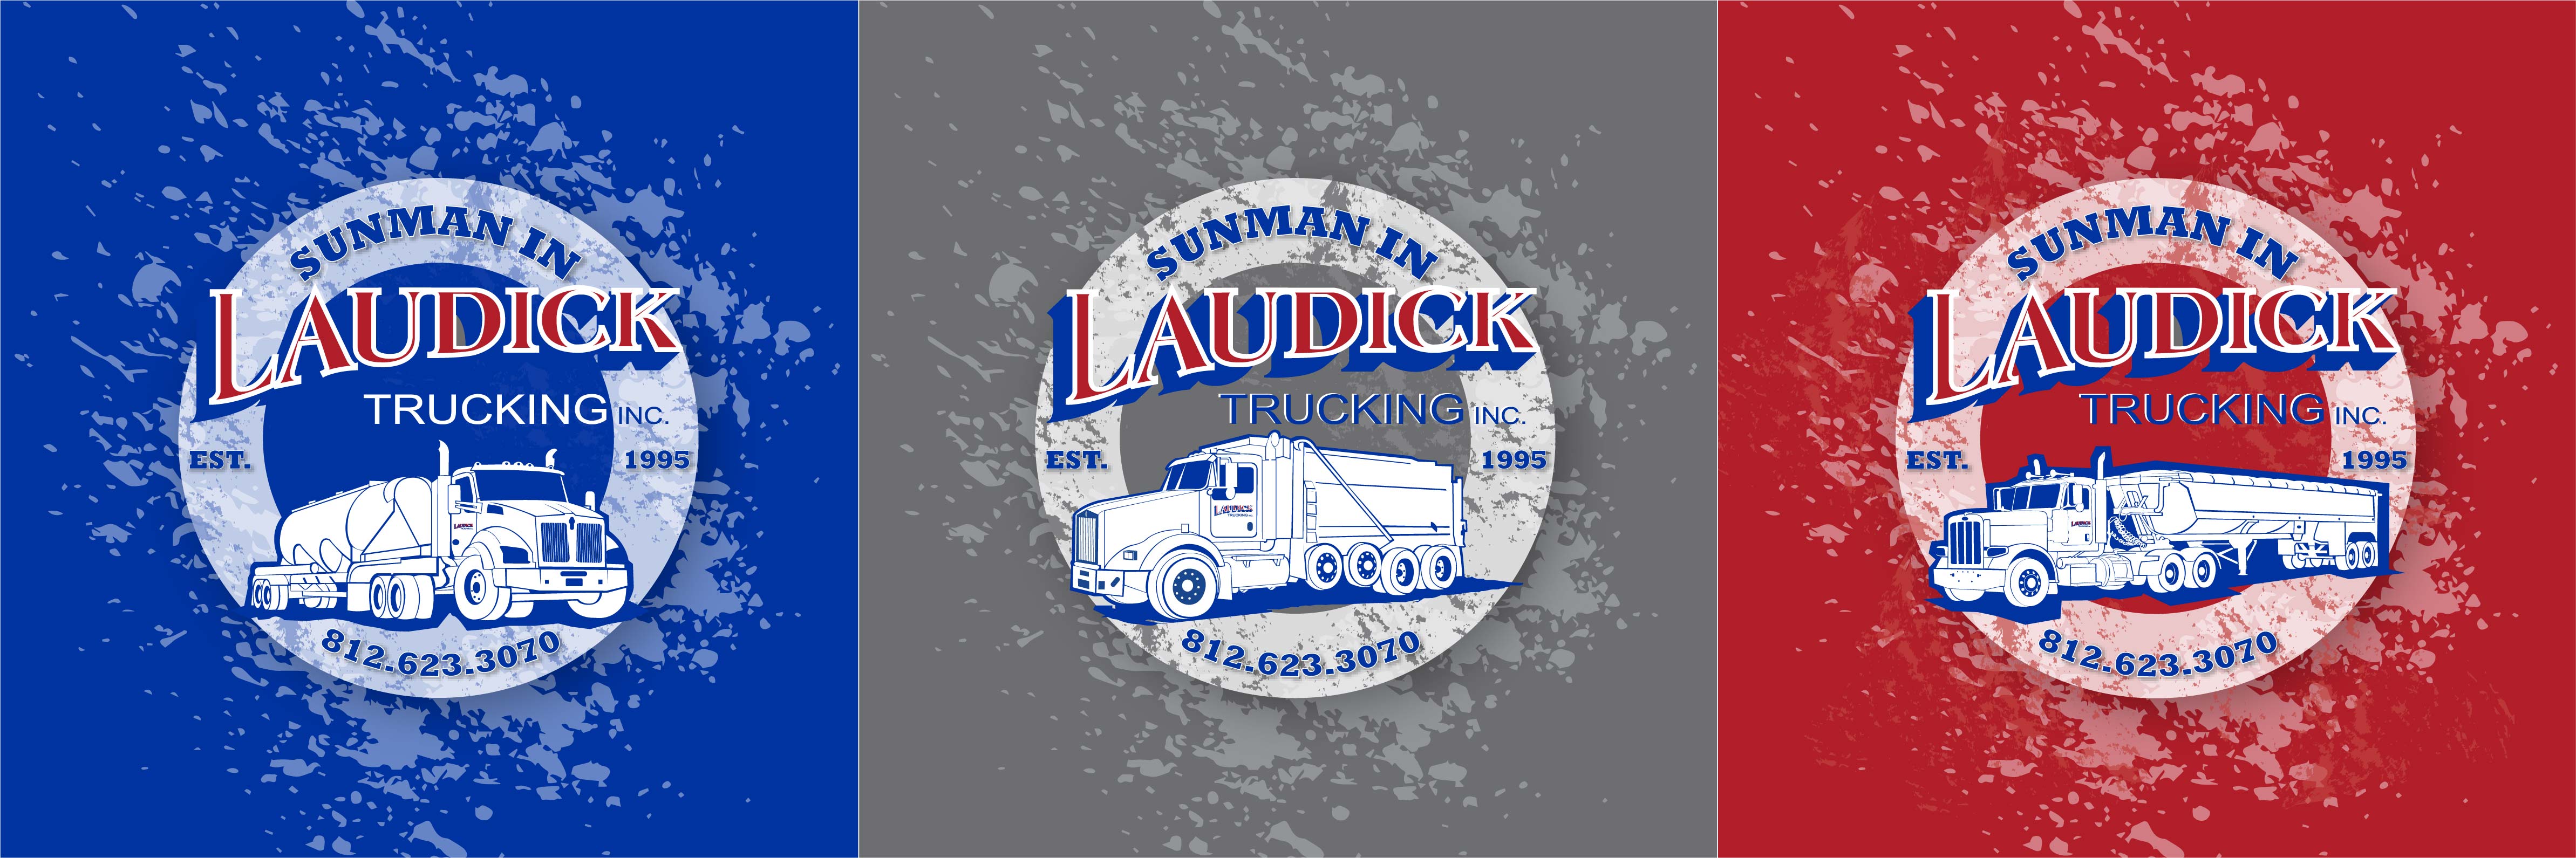 Laudick Trucking Shirt Artwork